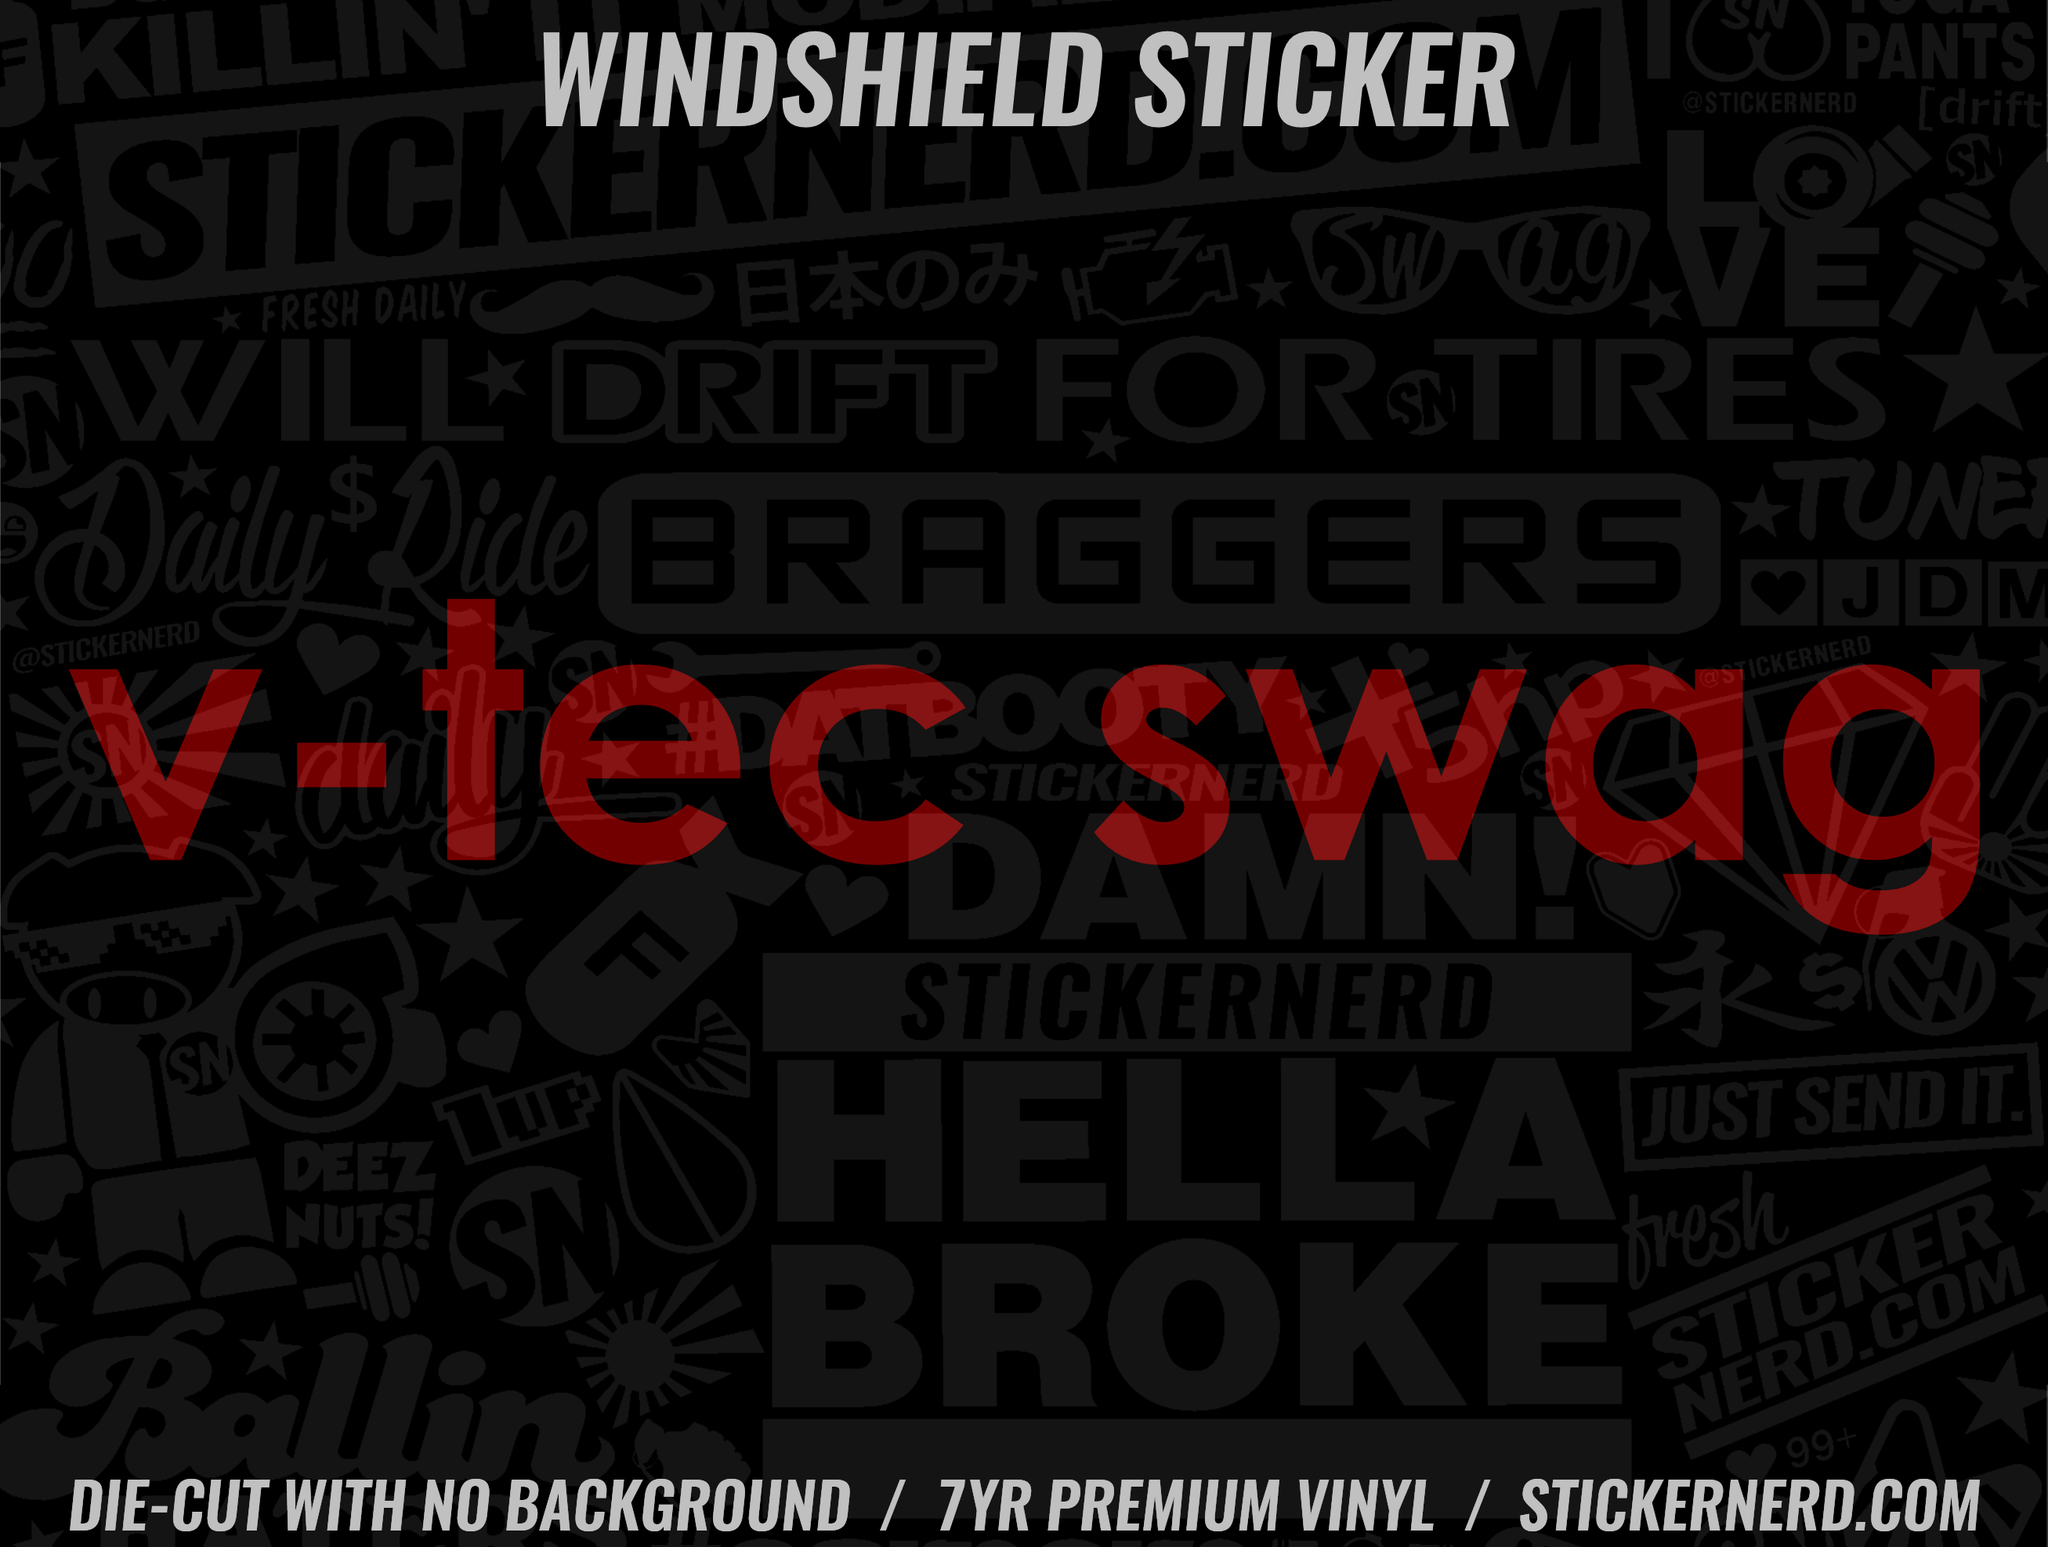 V-tec Swag Windshield Sticker - Window Decal - STICKERNERD.COM